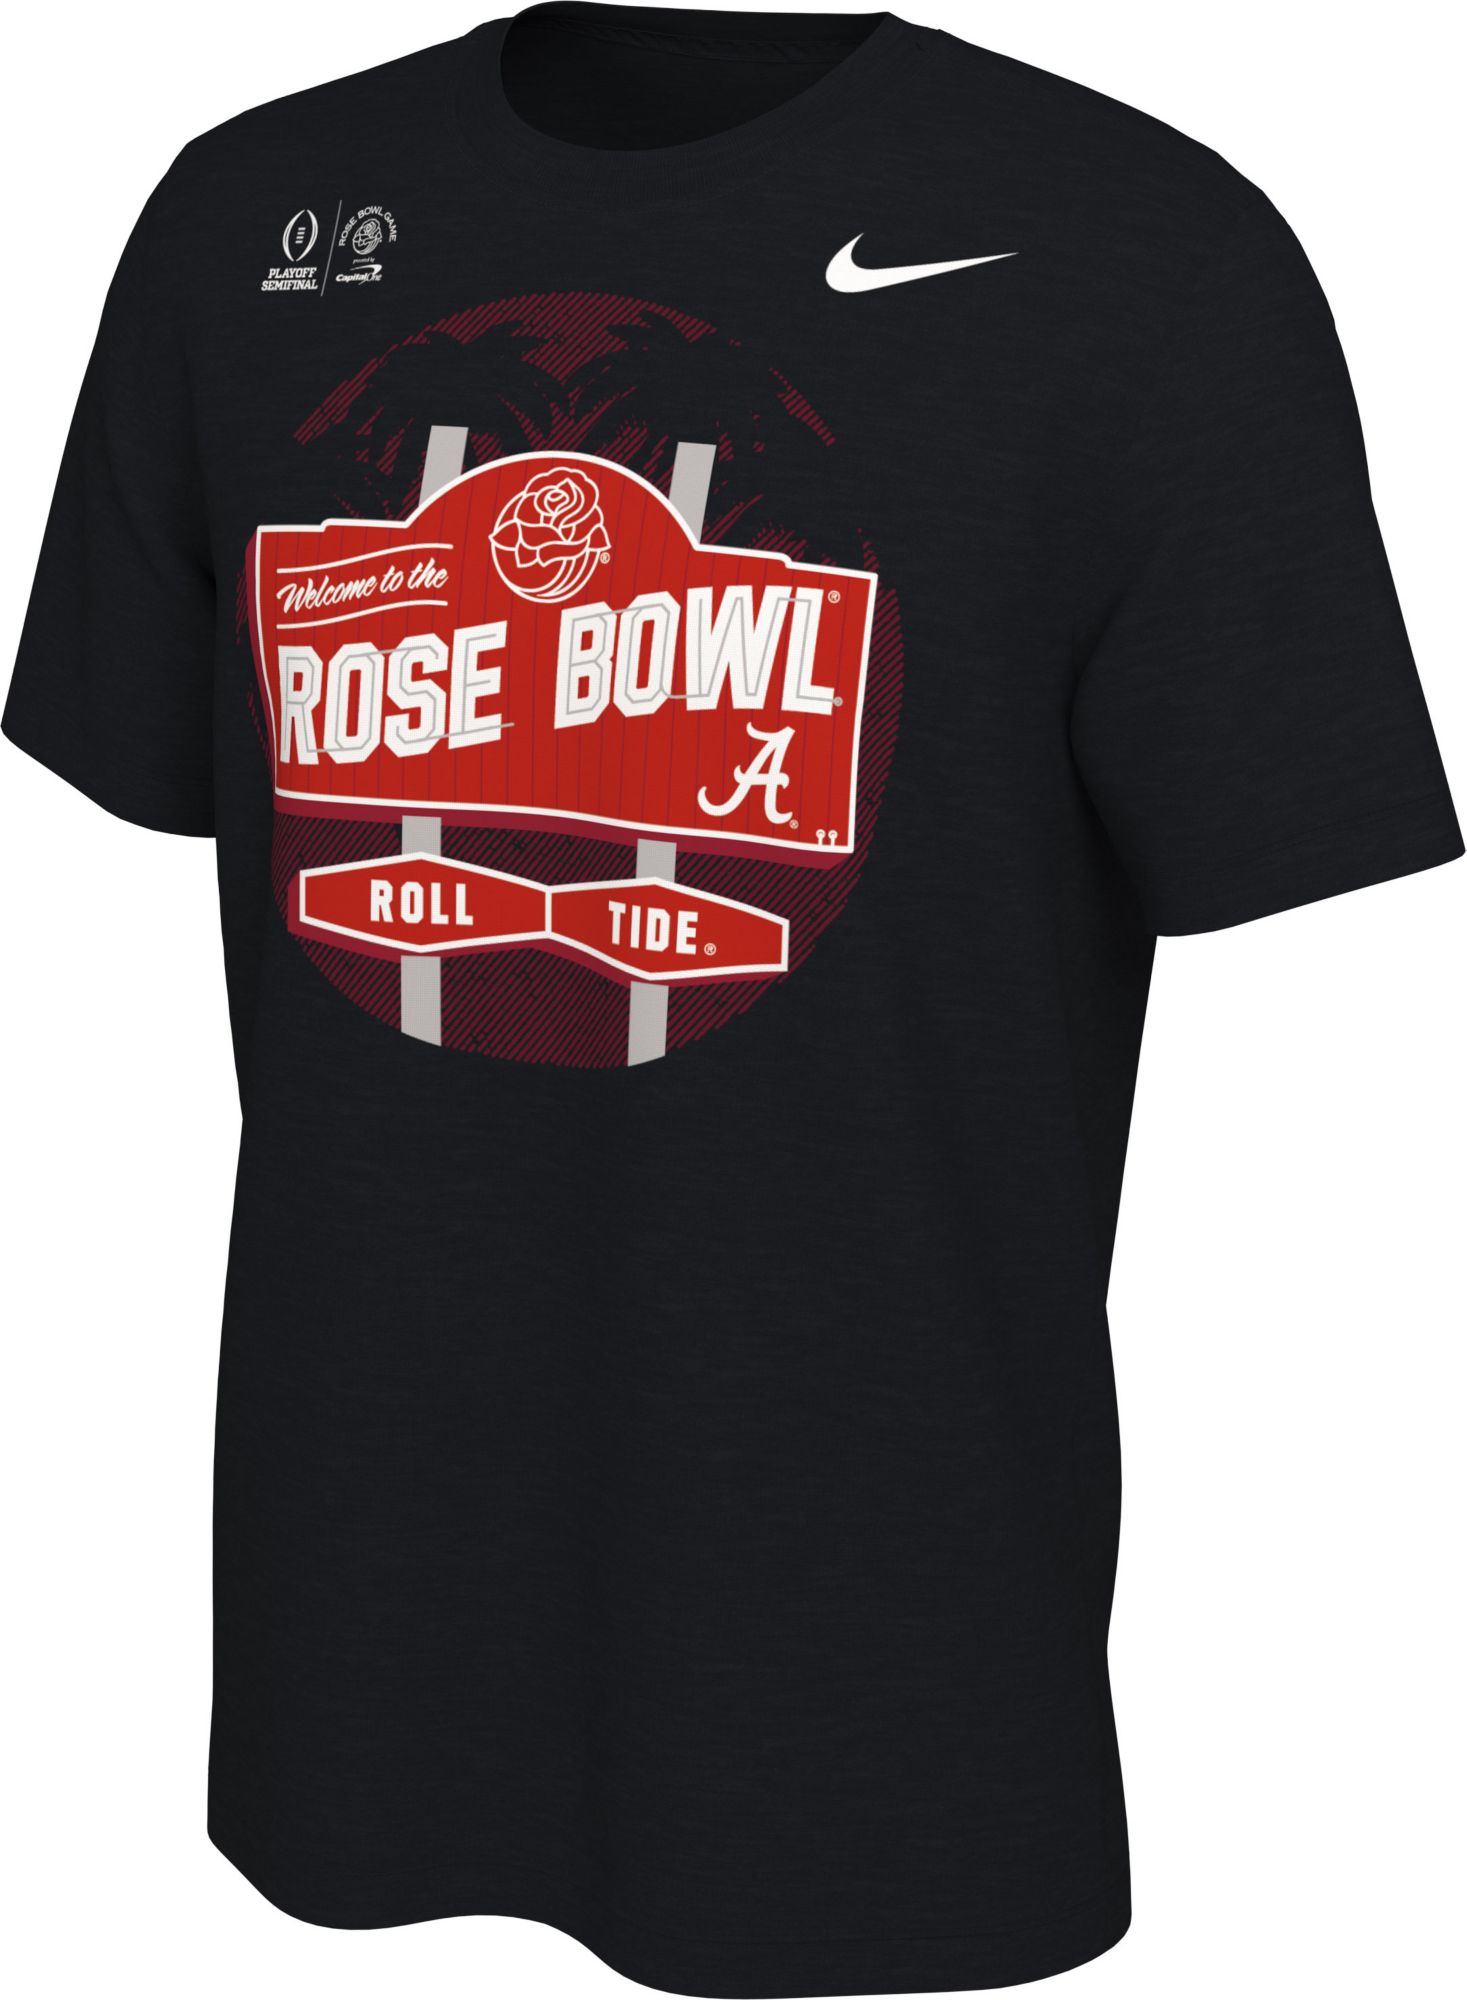 nike rose bowl apparel